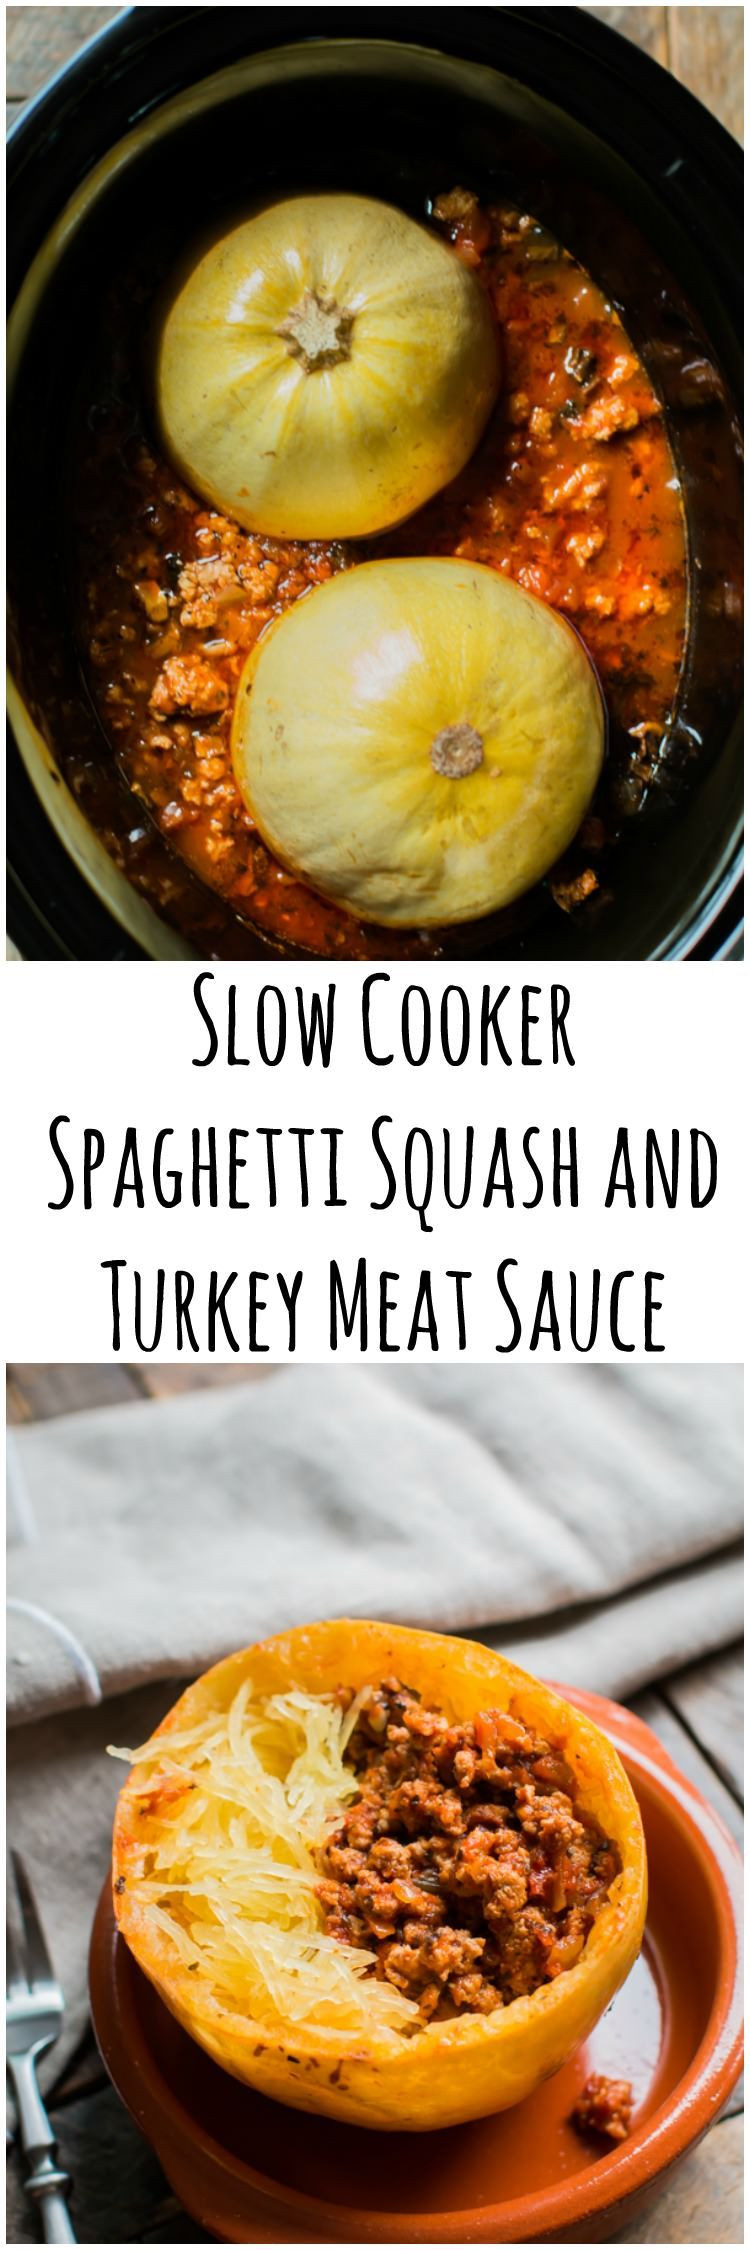 Slow Cooker Spaghetti Squash
 Slow Cooker Spaghetti Squash and Turkey Meat Sauce